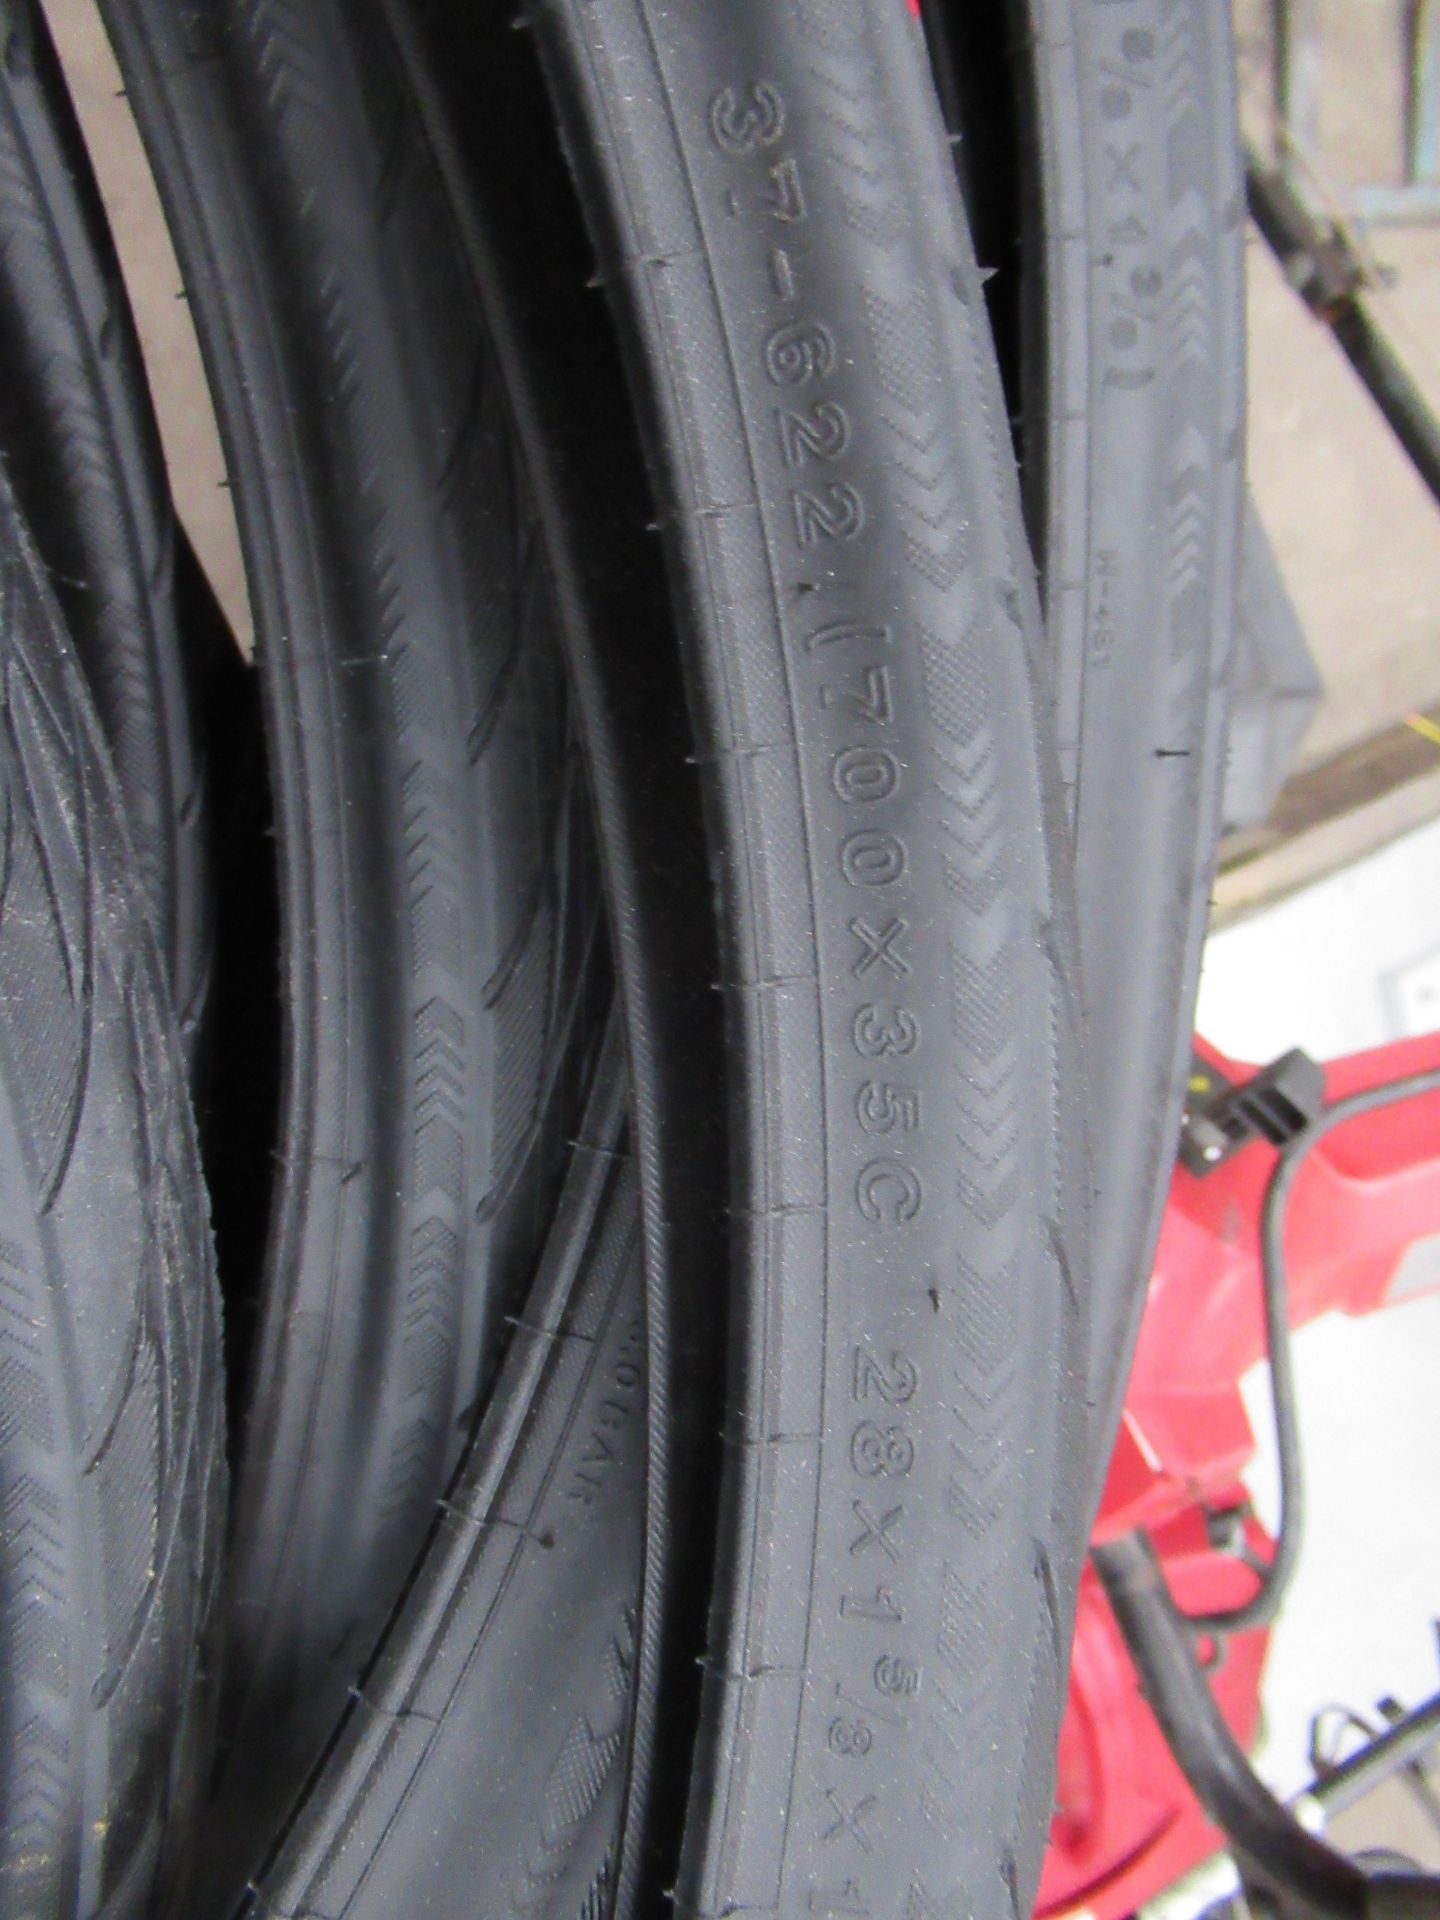 14 x Arisun Hybrid City 700x35c tyres (RRP£14.99 each) - Image 3 of 3